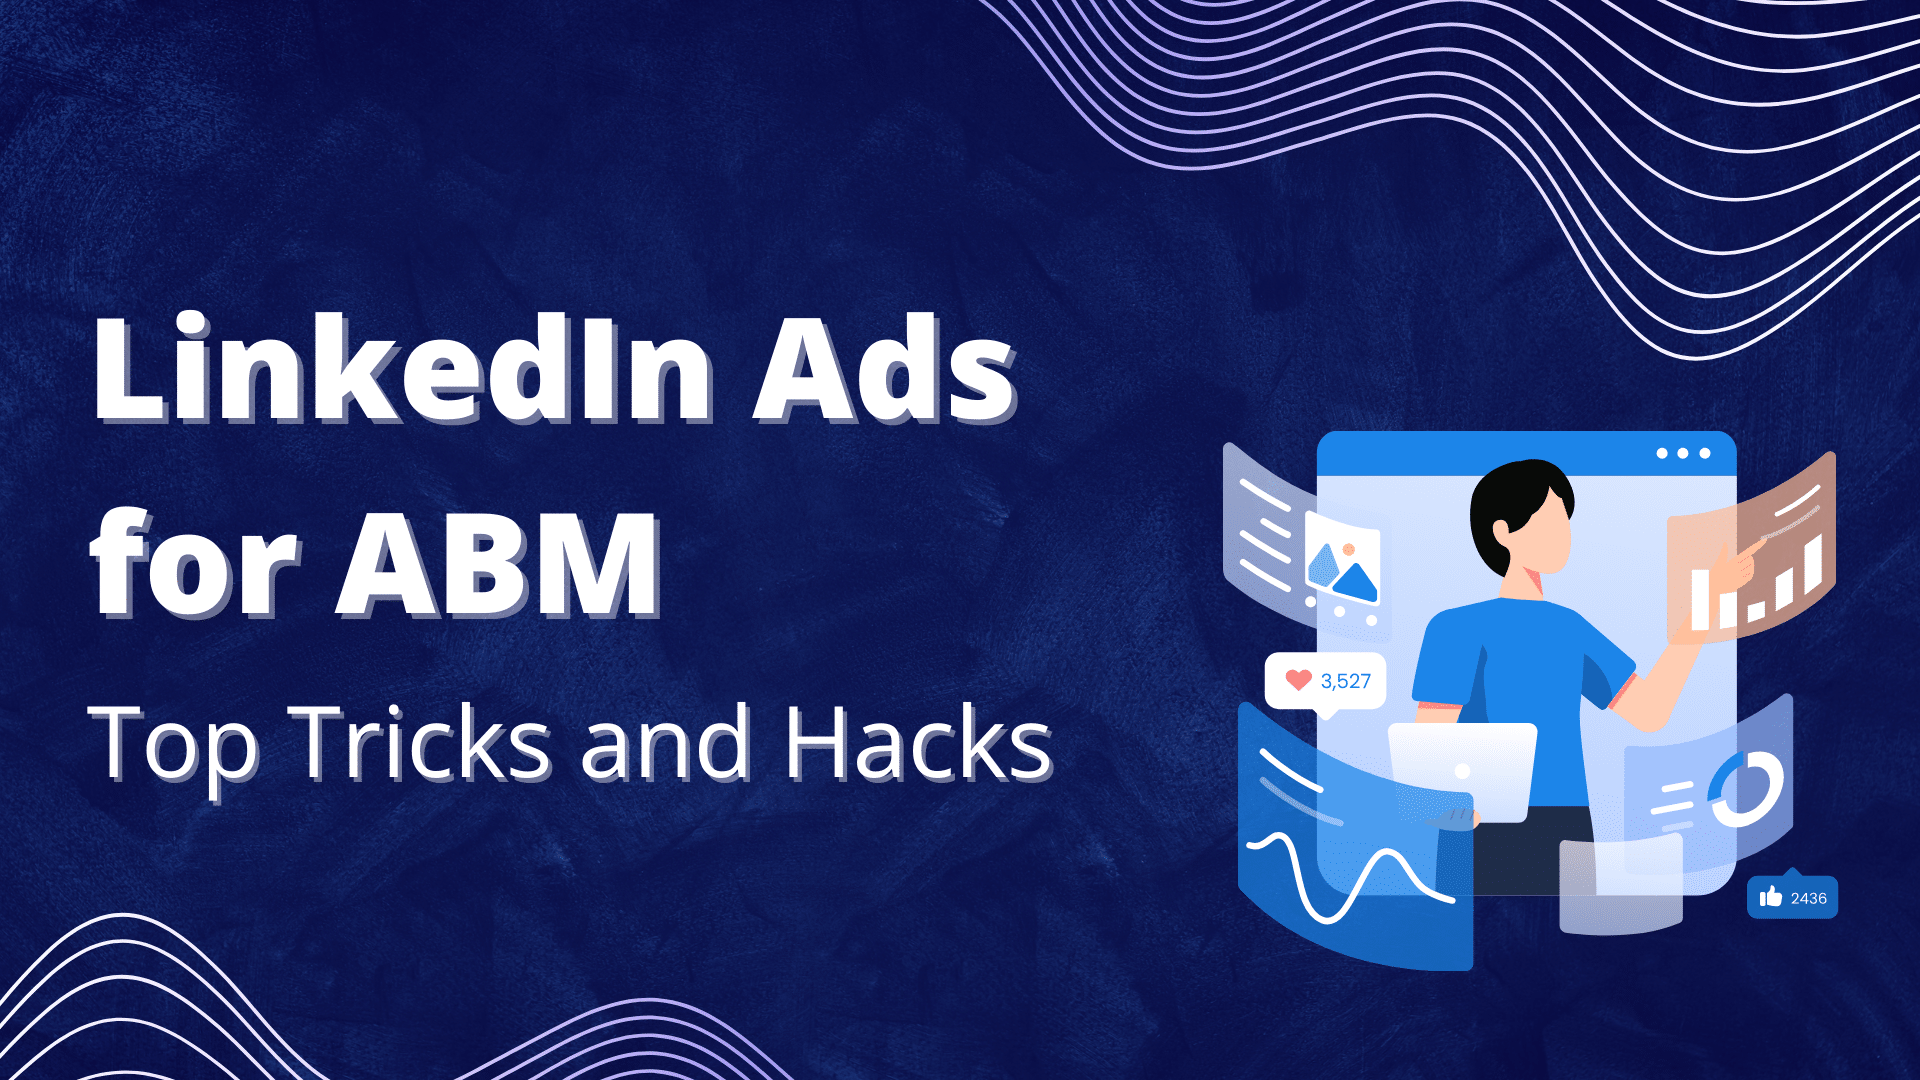 LinkedIn Ads for ABM Top Tricks and Hacks